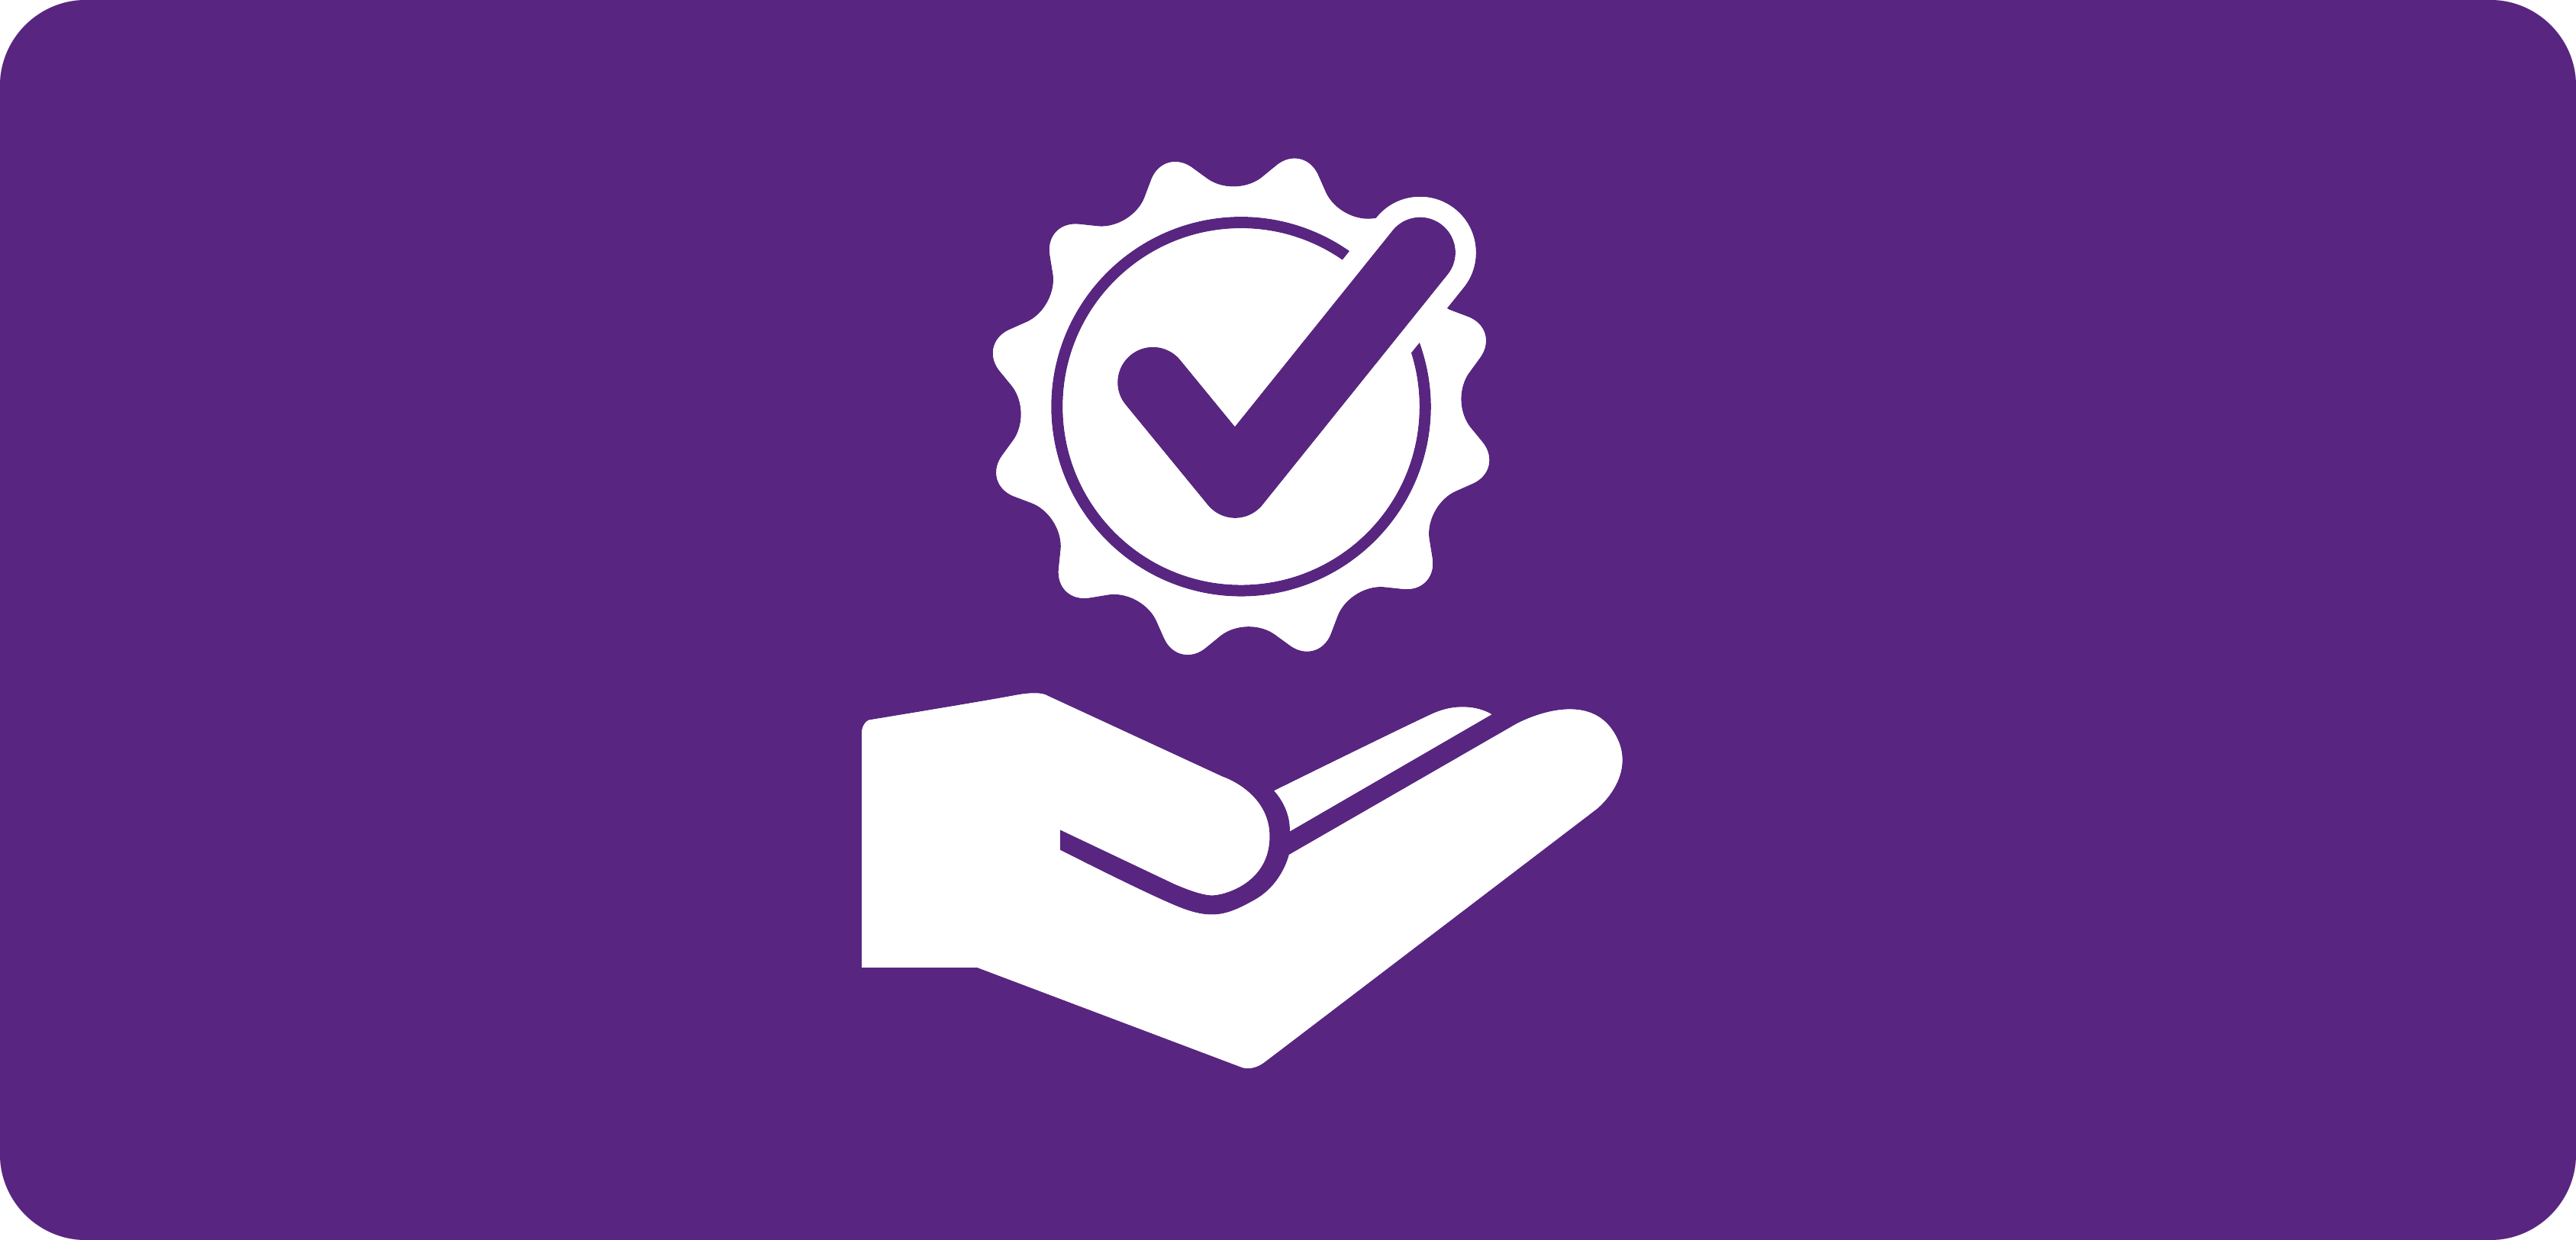 White award icon on purple background